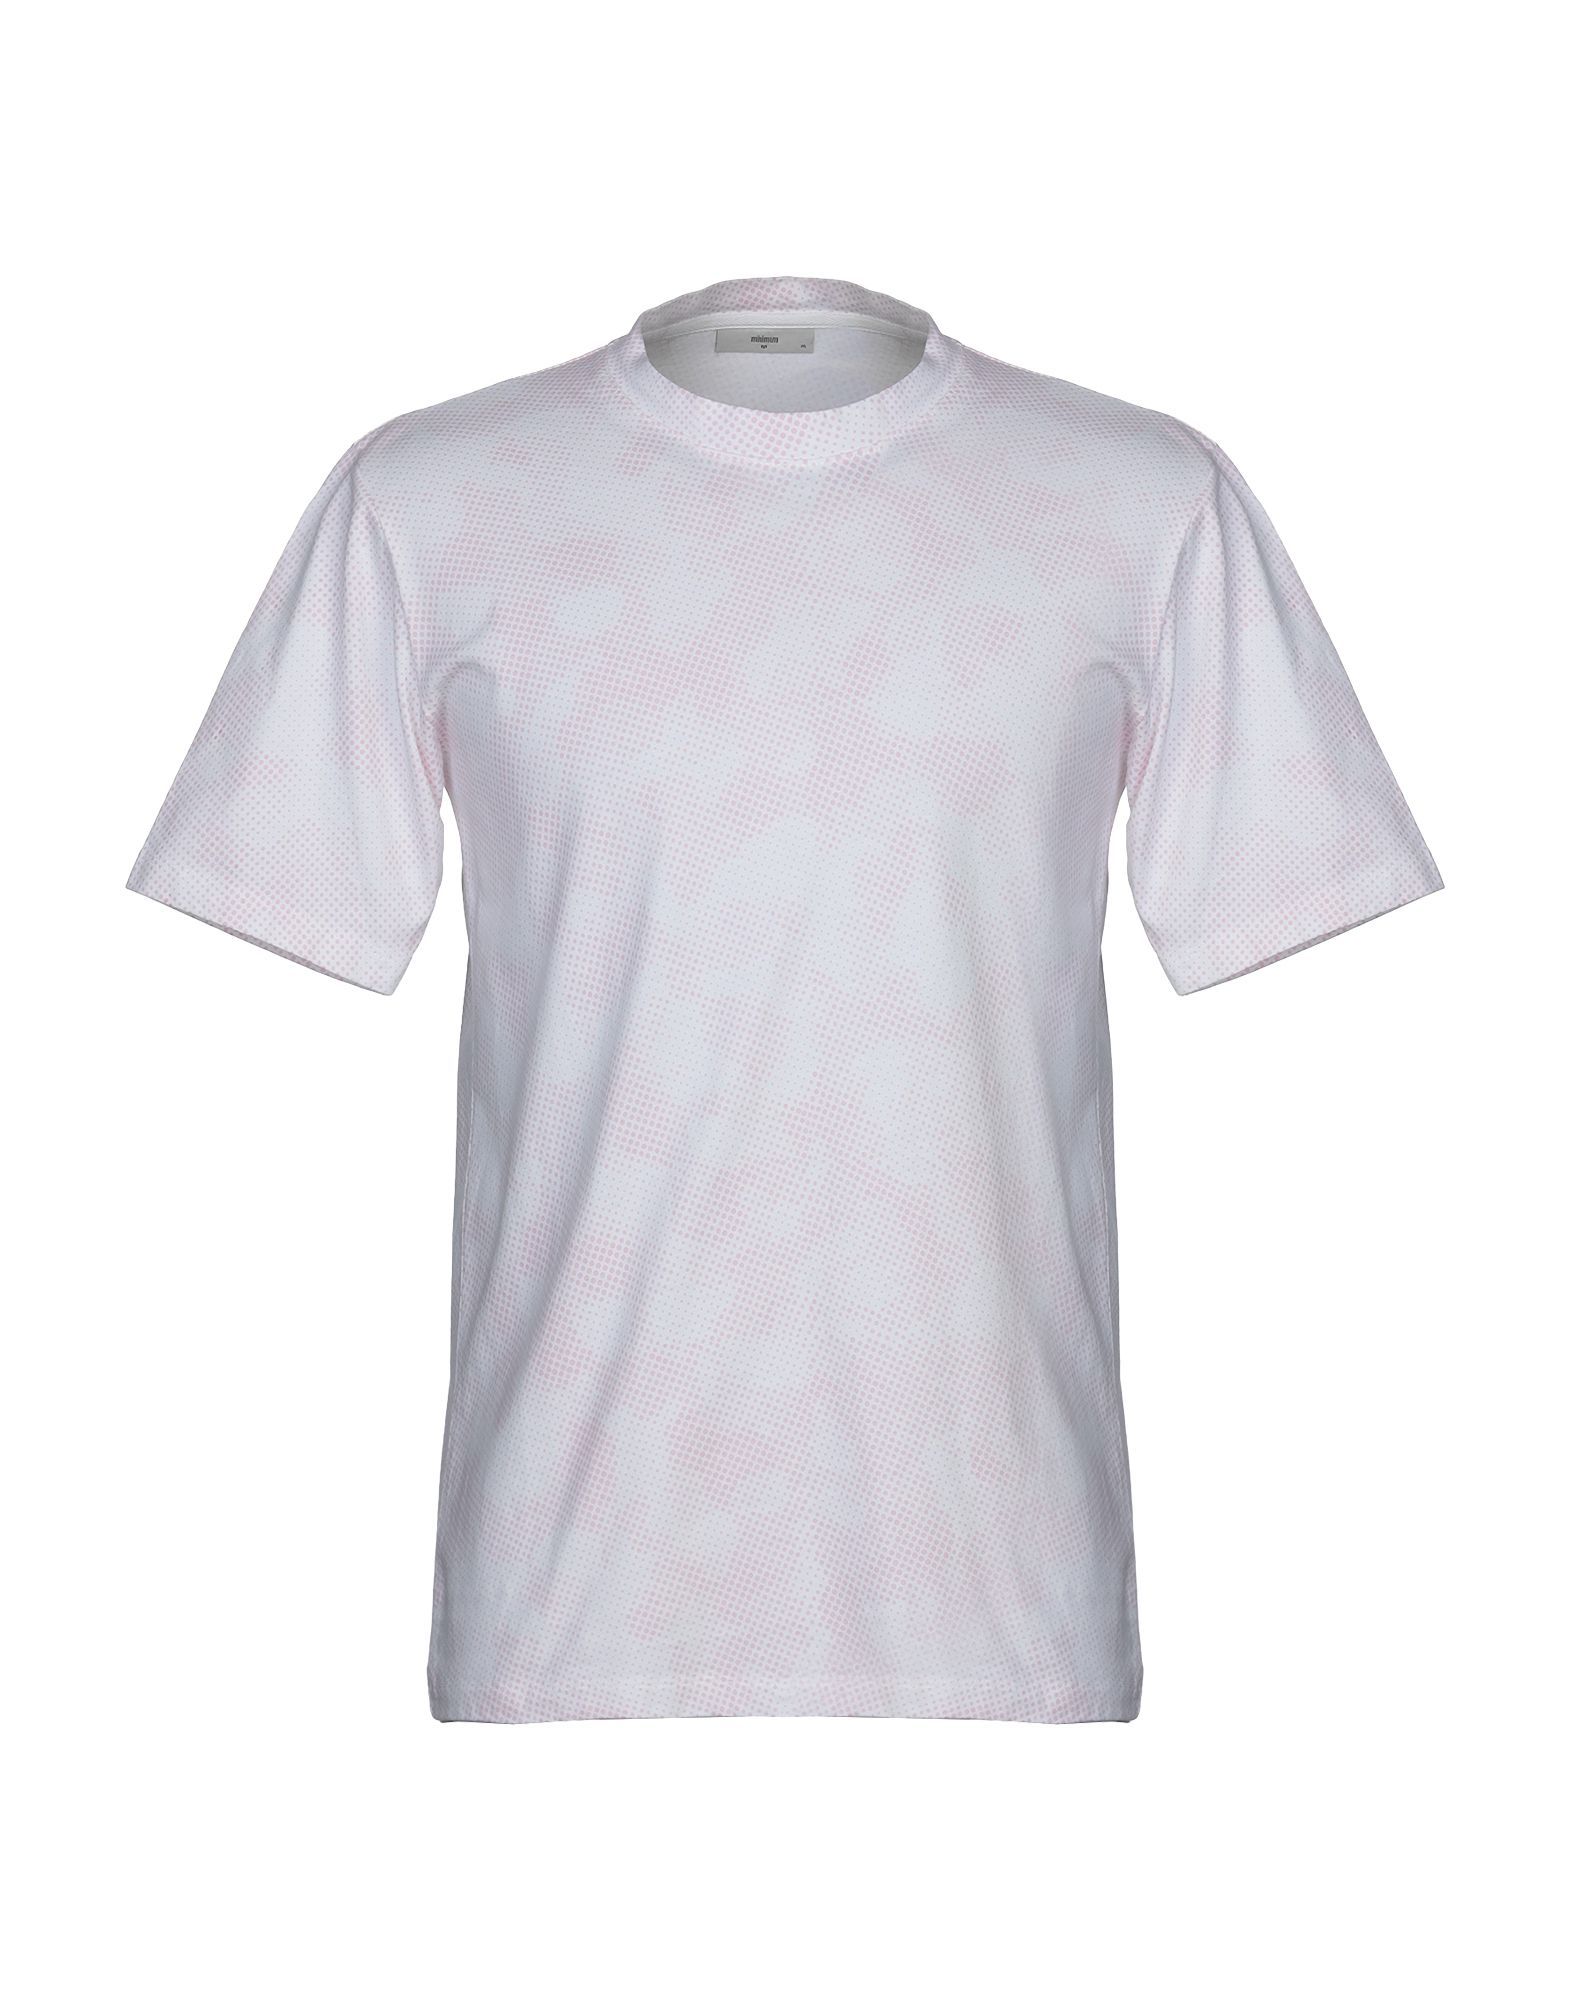 Minimum Man T-shirts Cotton